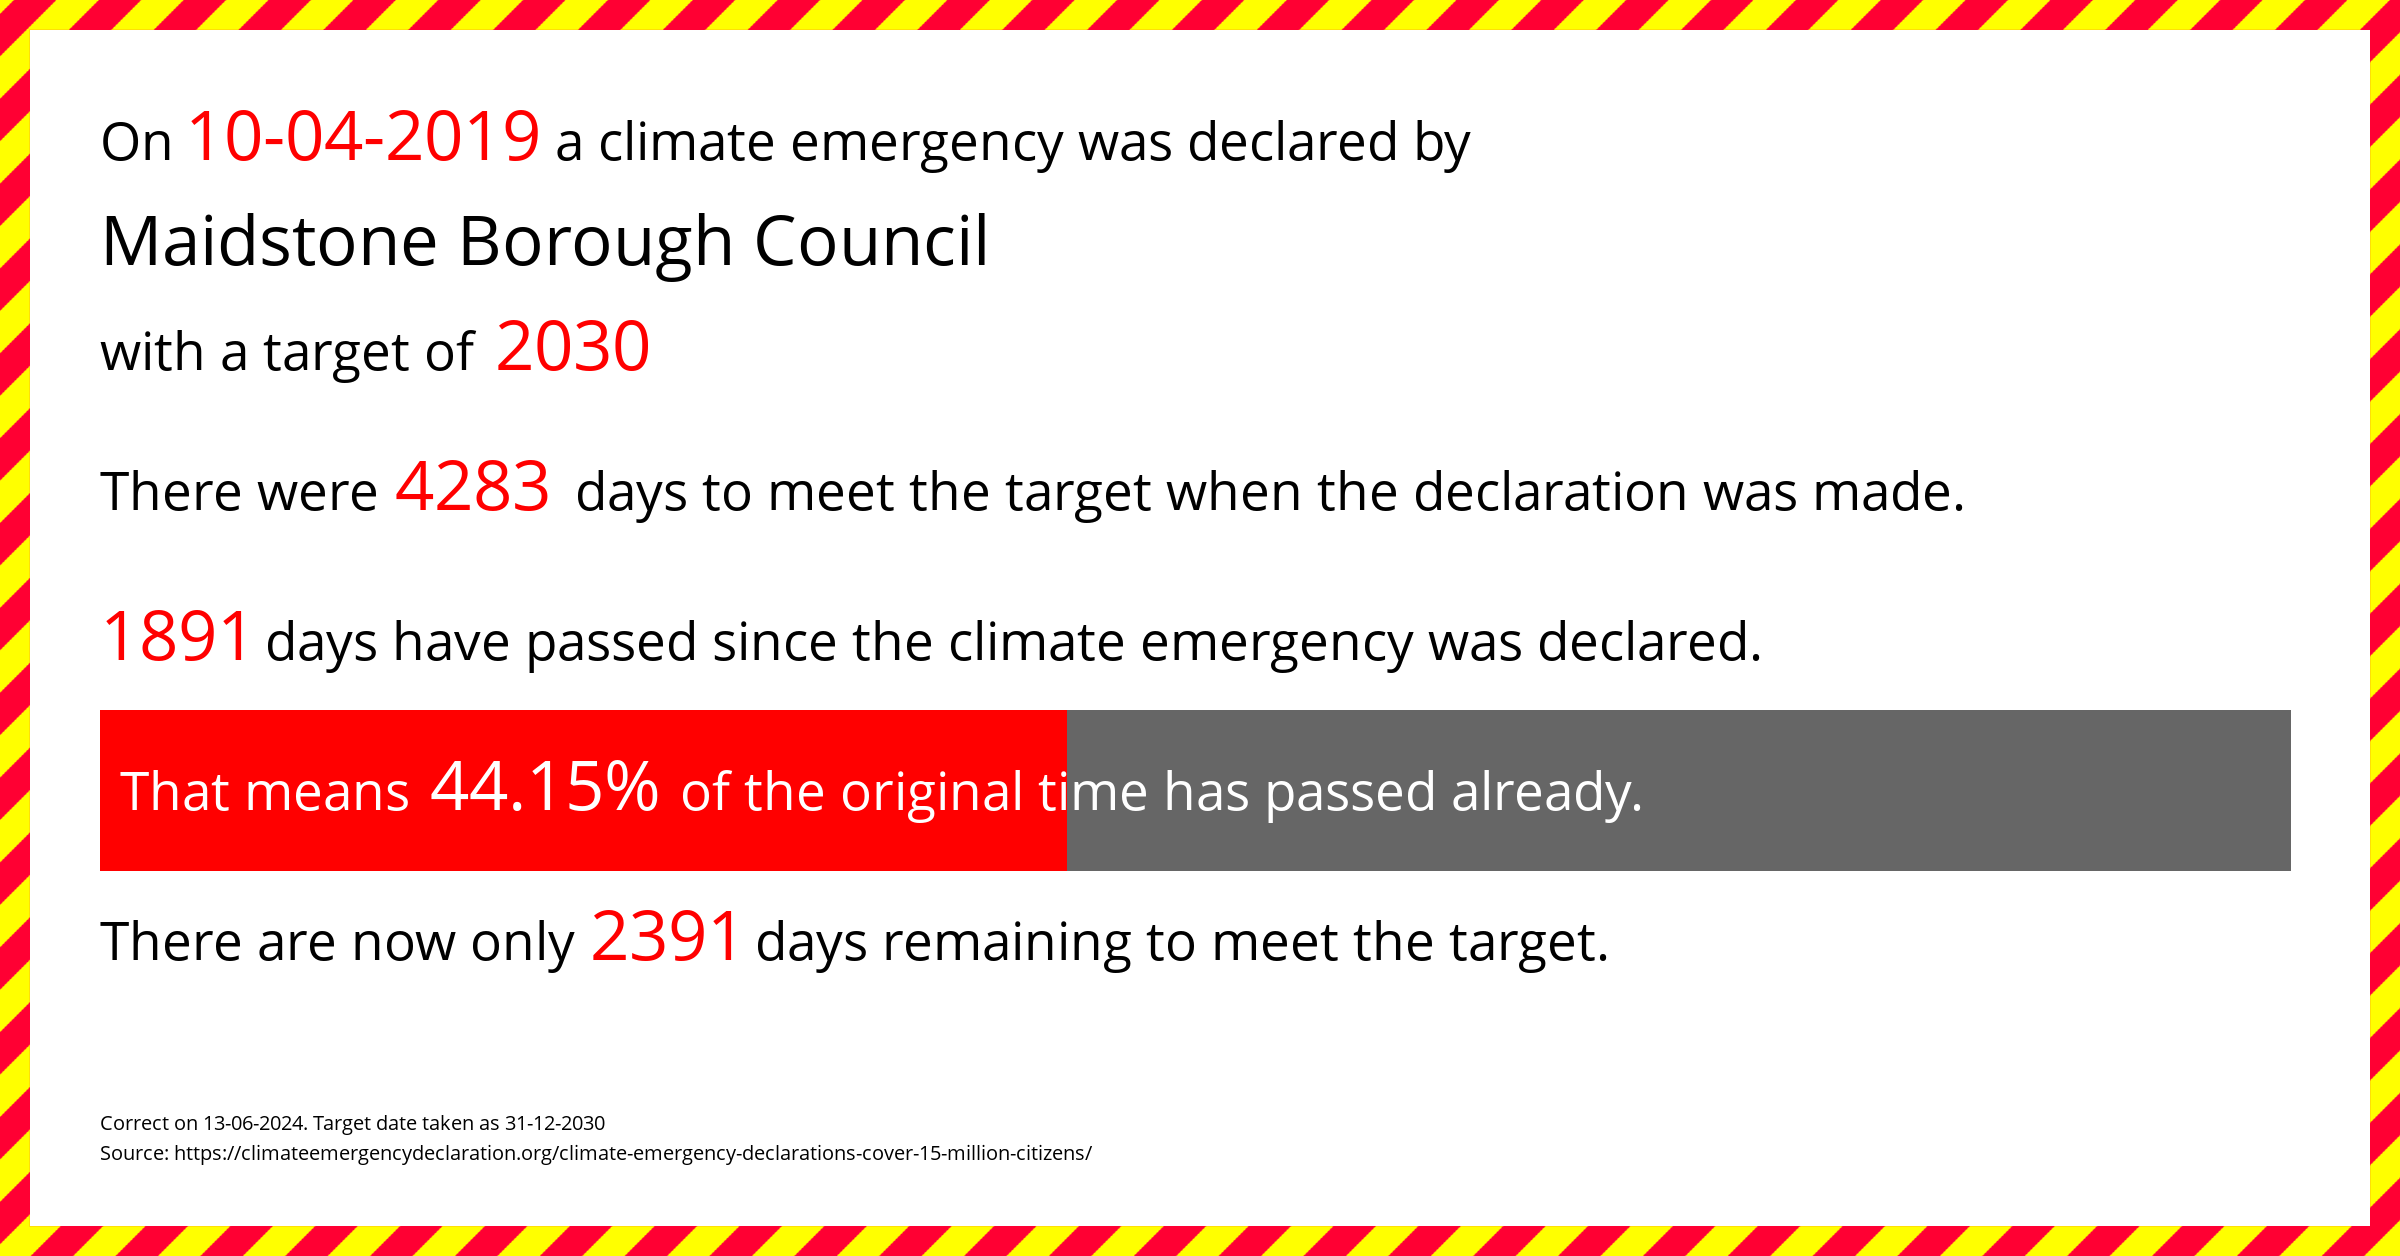 maidstone-borough-council-climate-emergency